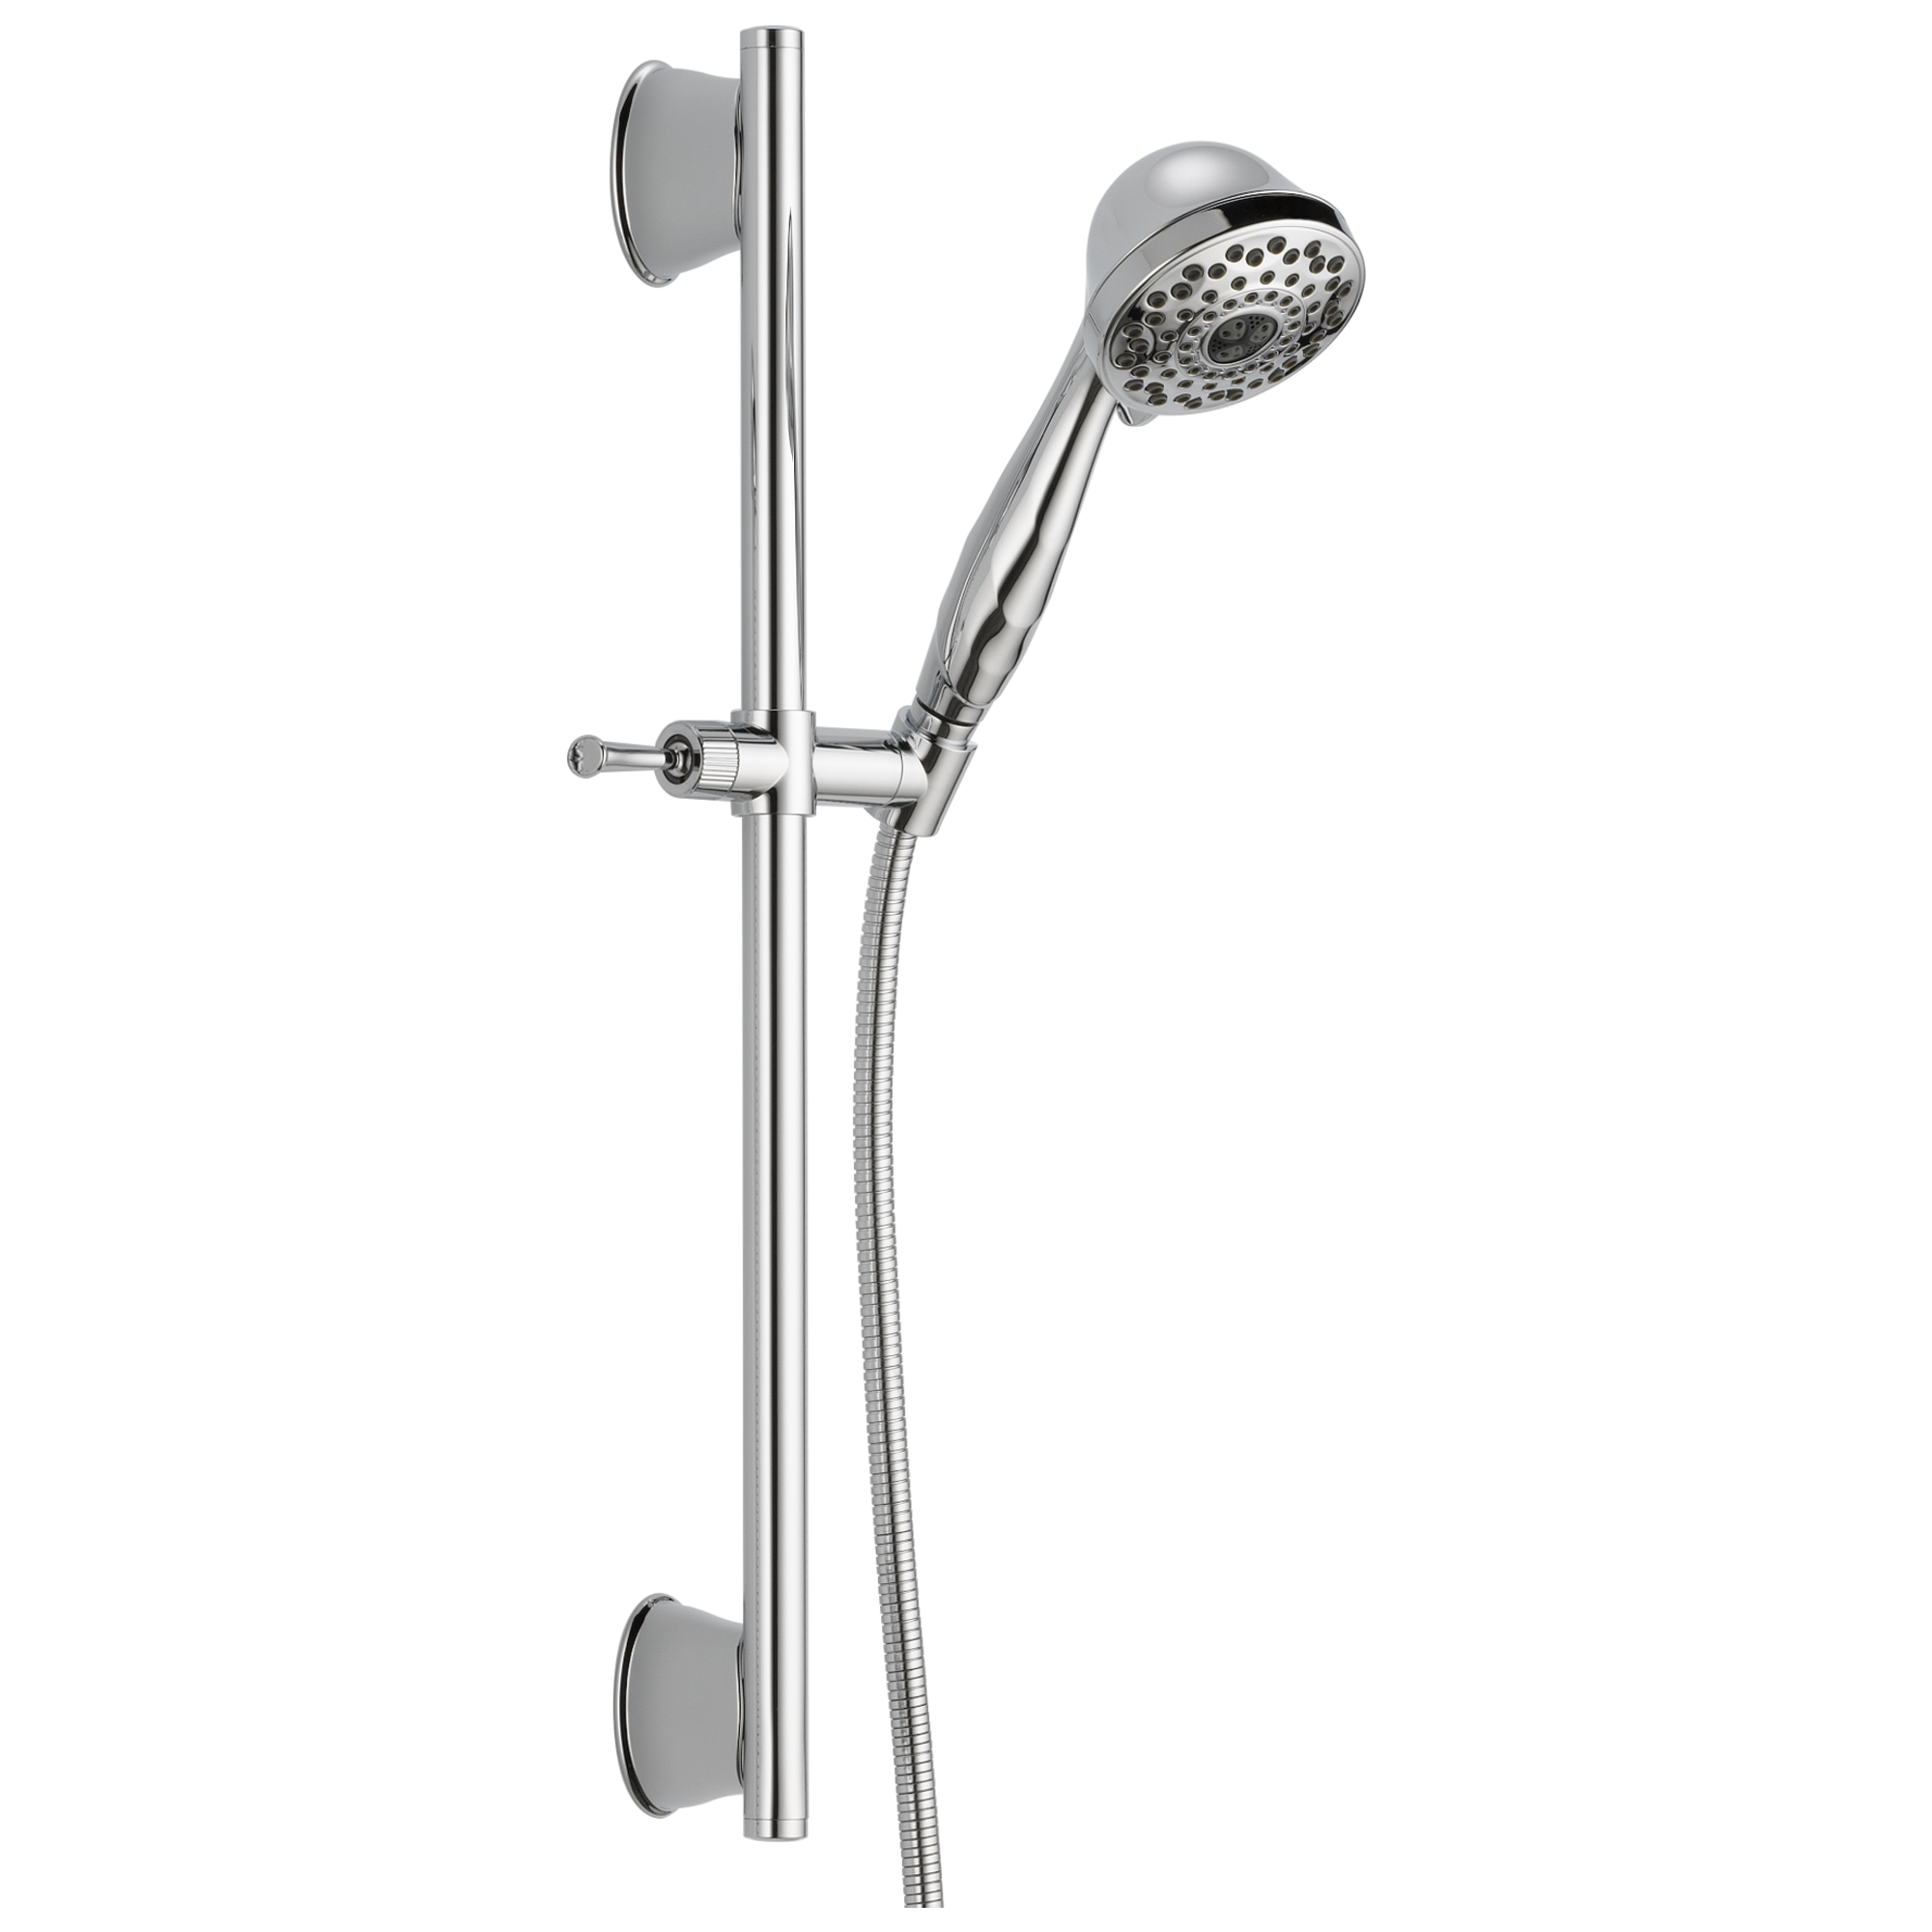 Delta Universal Showering Components: 7-Setting Slide Bar Hand Shower